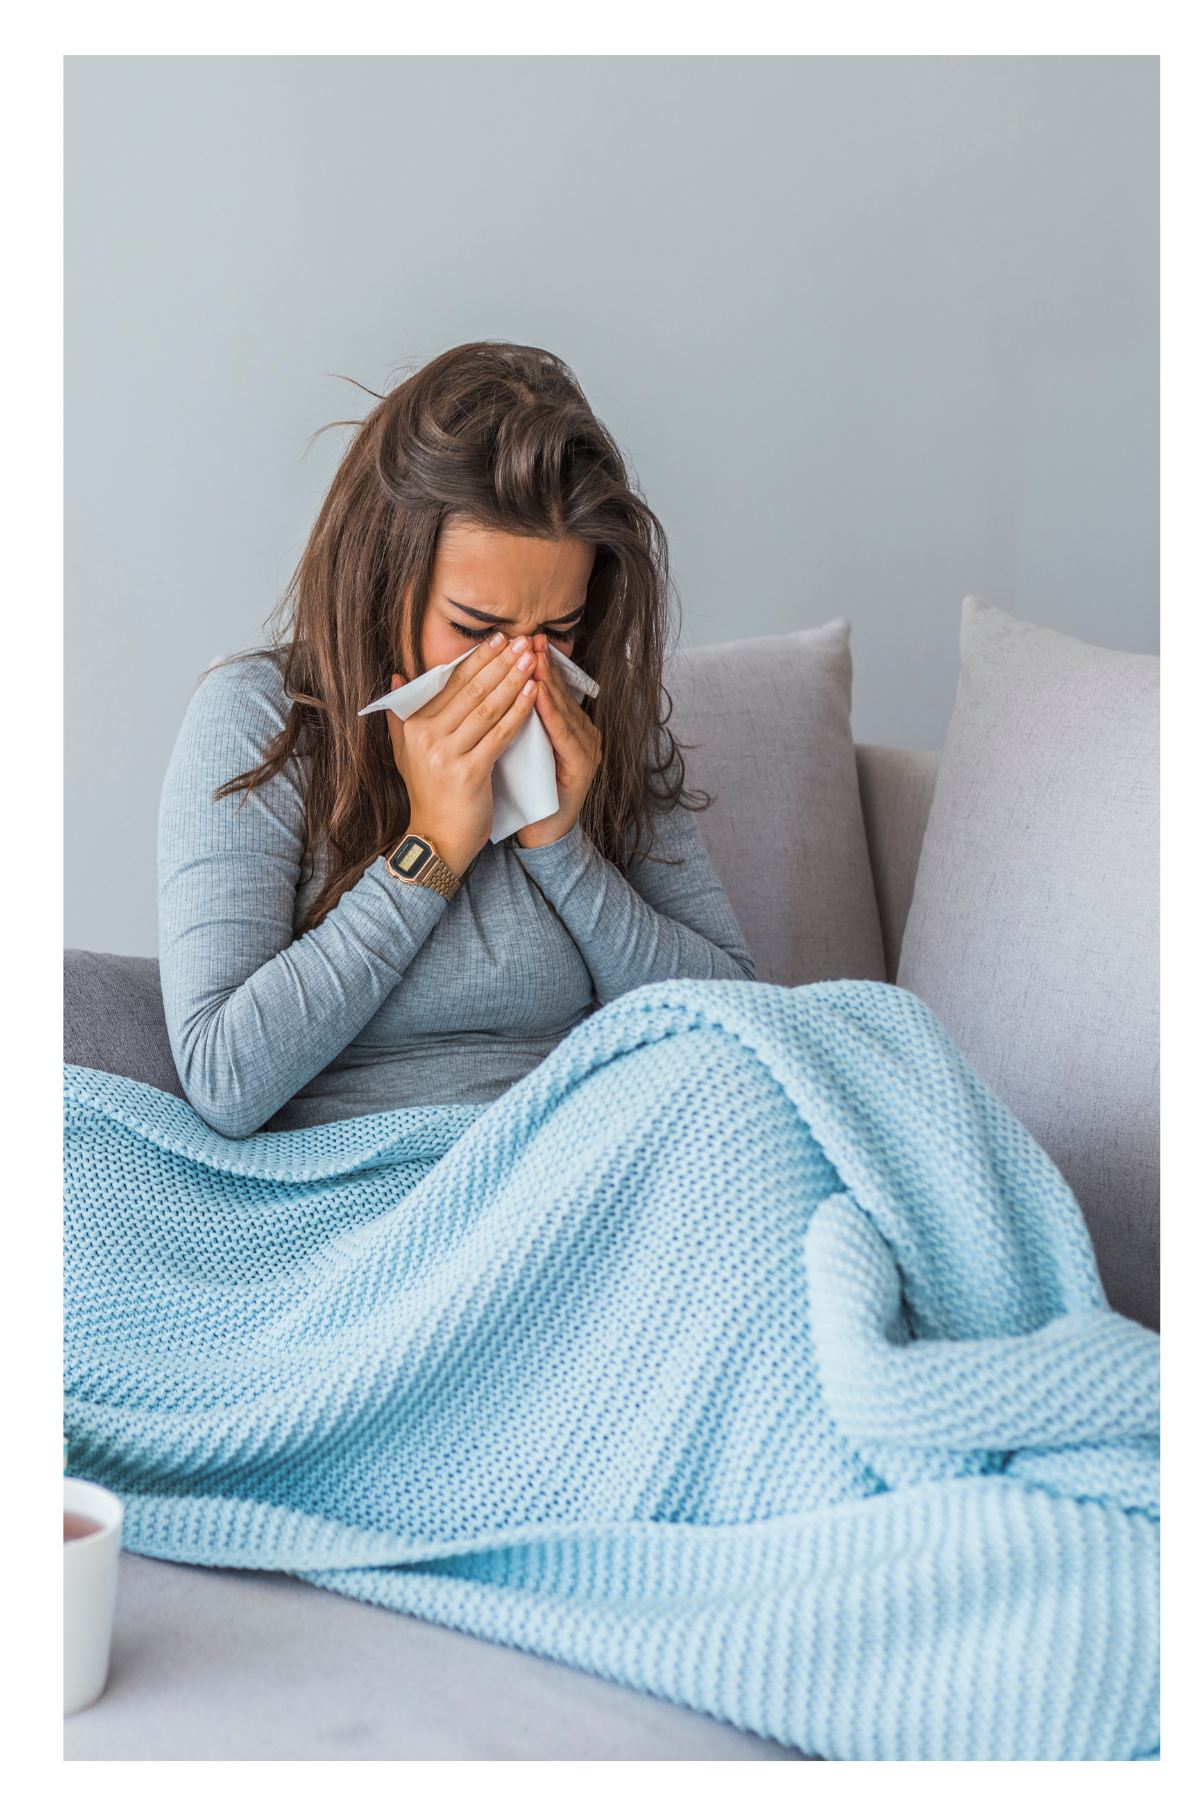 Sick woman, sneezing into tissue.